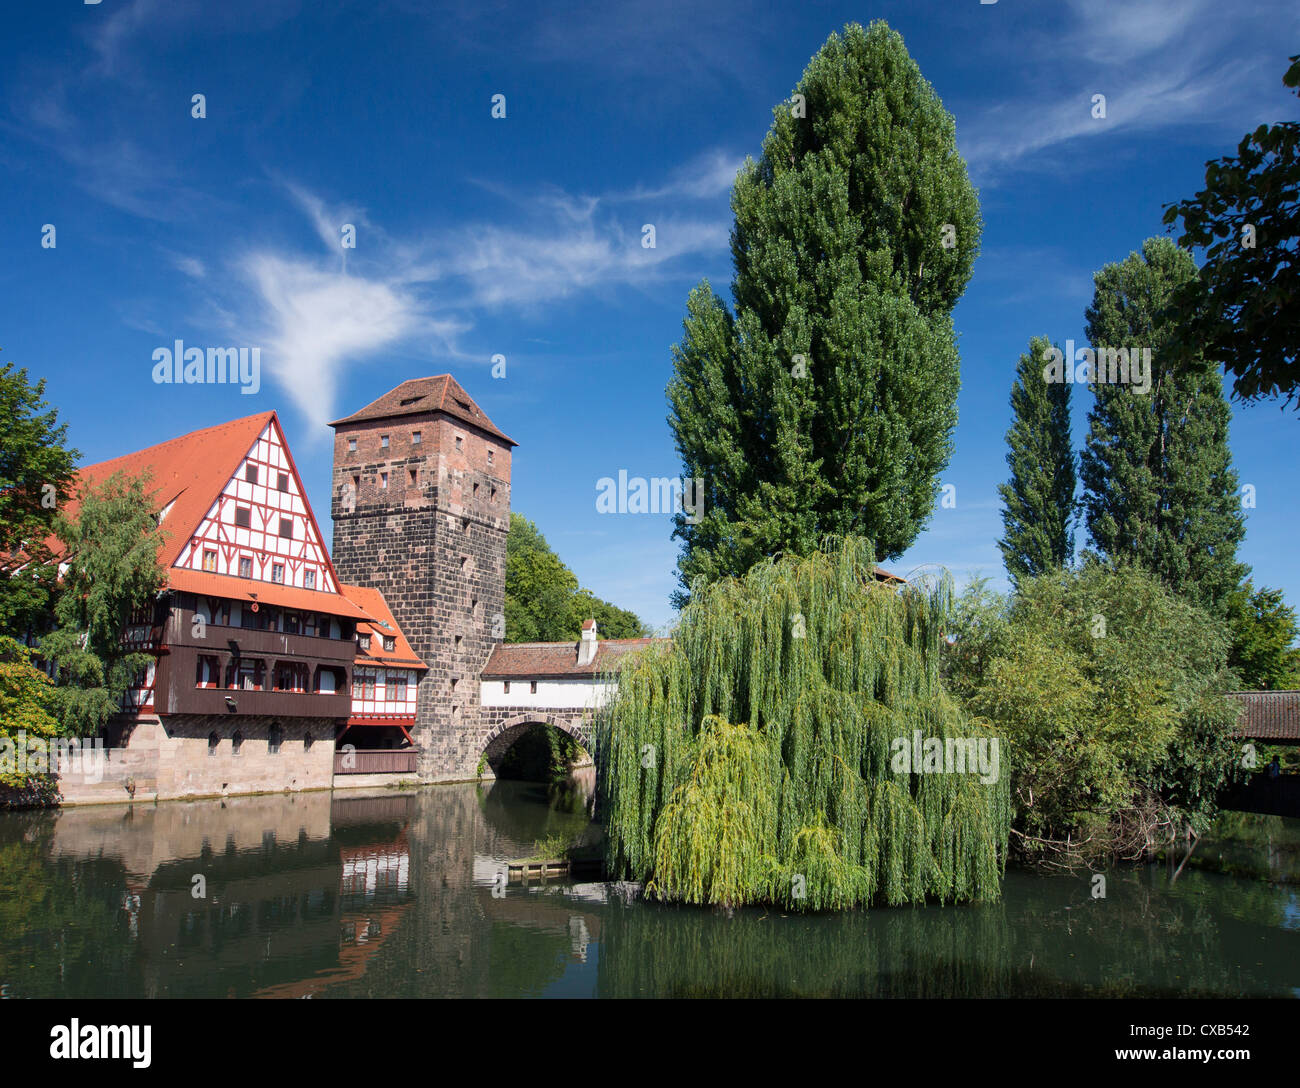 View of historic Wine Vault or Weinstadel, water tower and Hangman's Way or Henkersteg beside Pegnitz River in Nuremberg, German Stock Photo